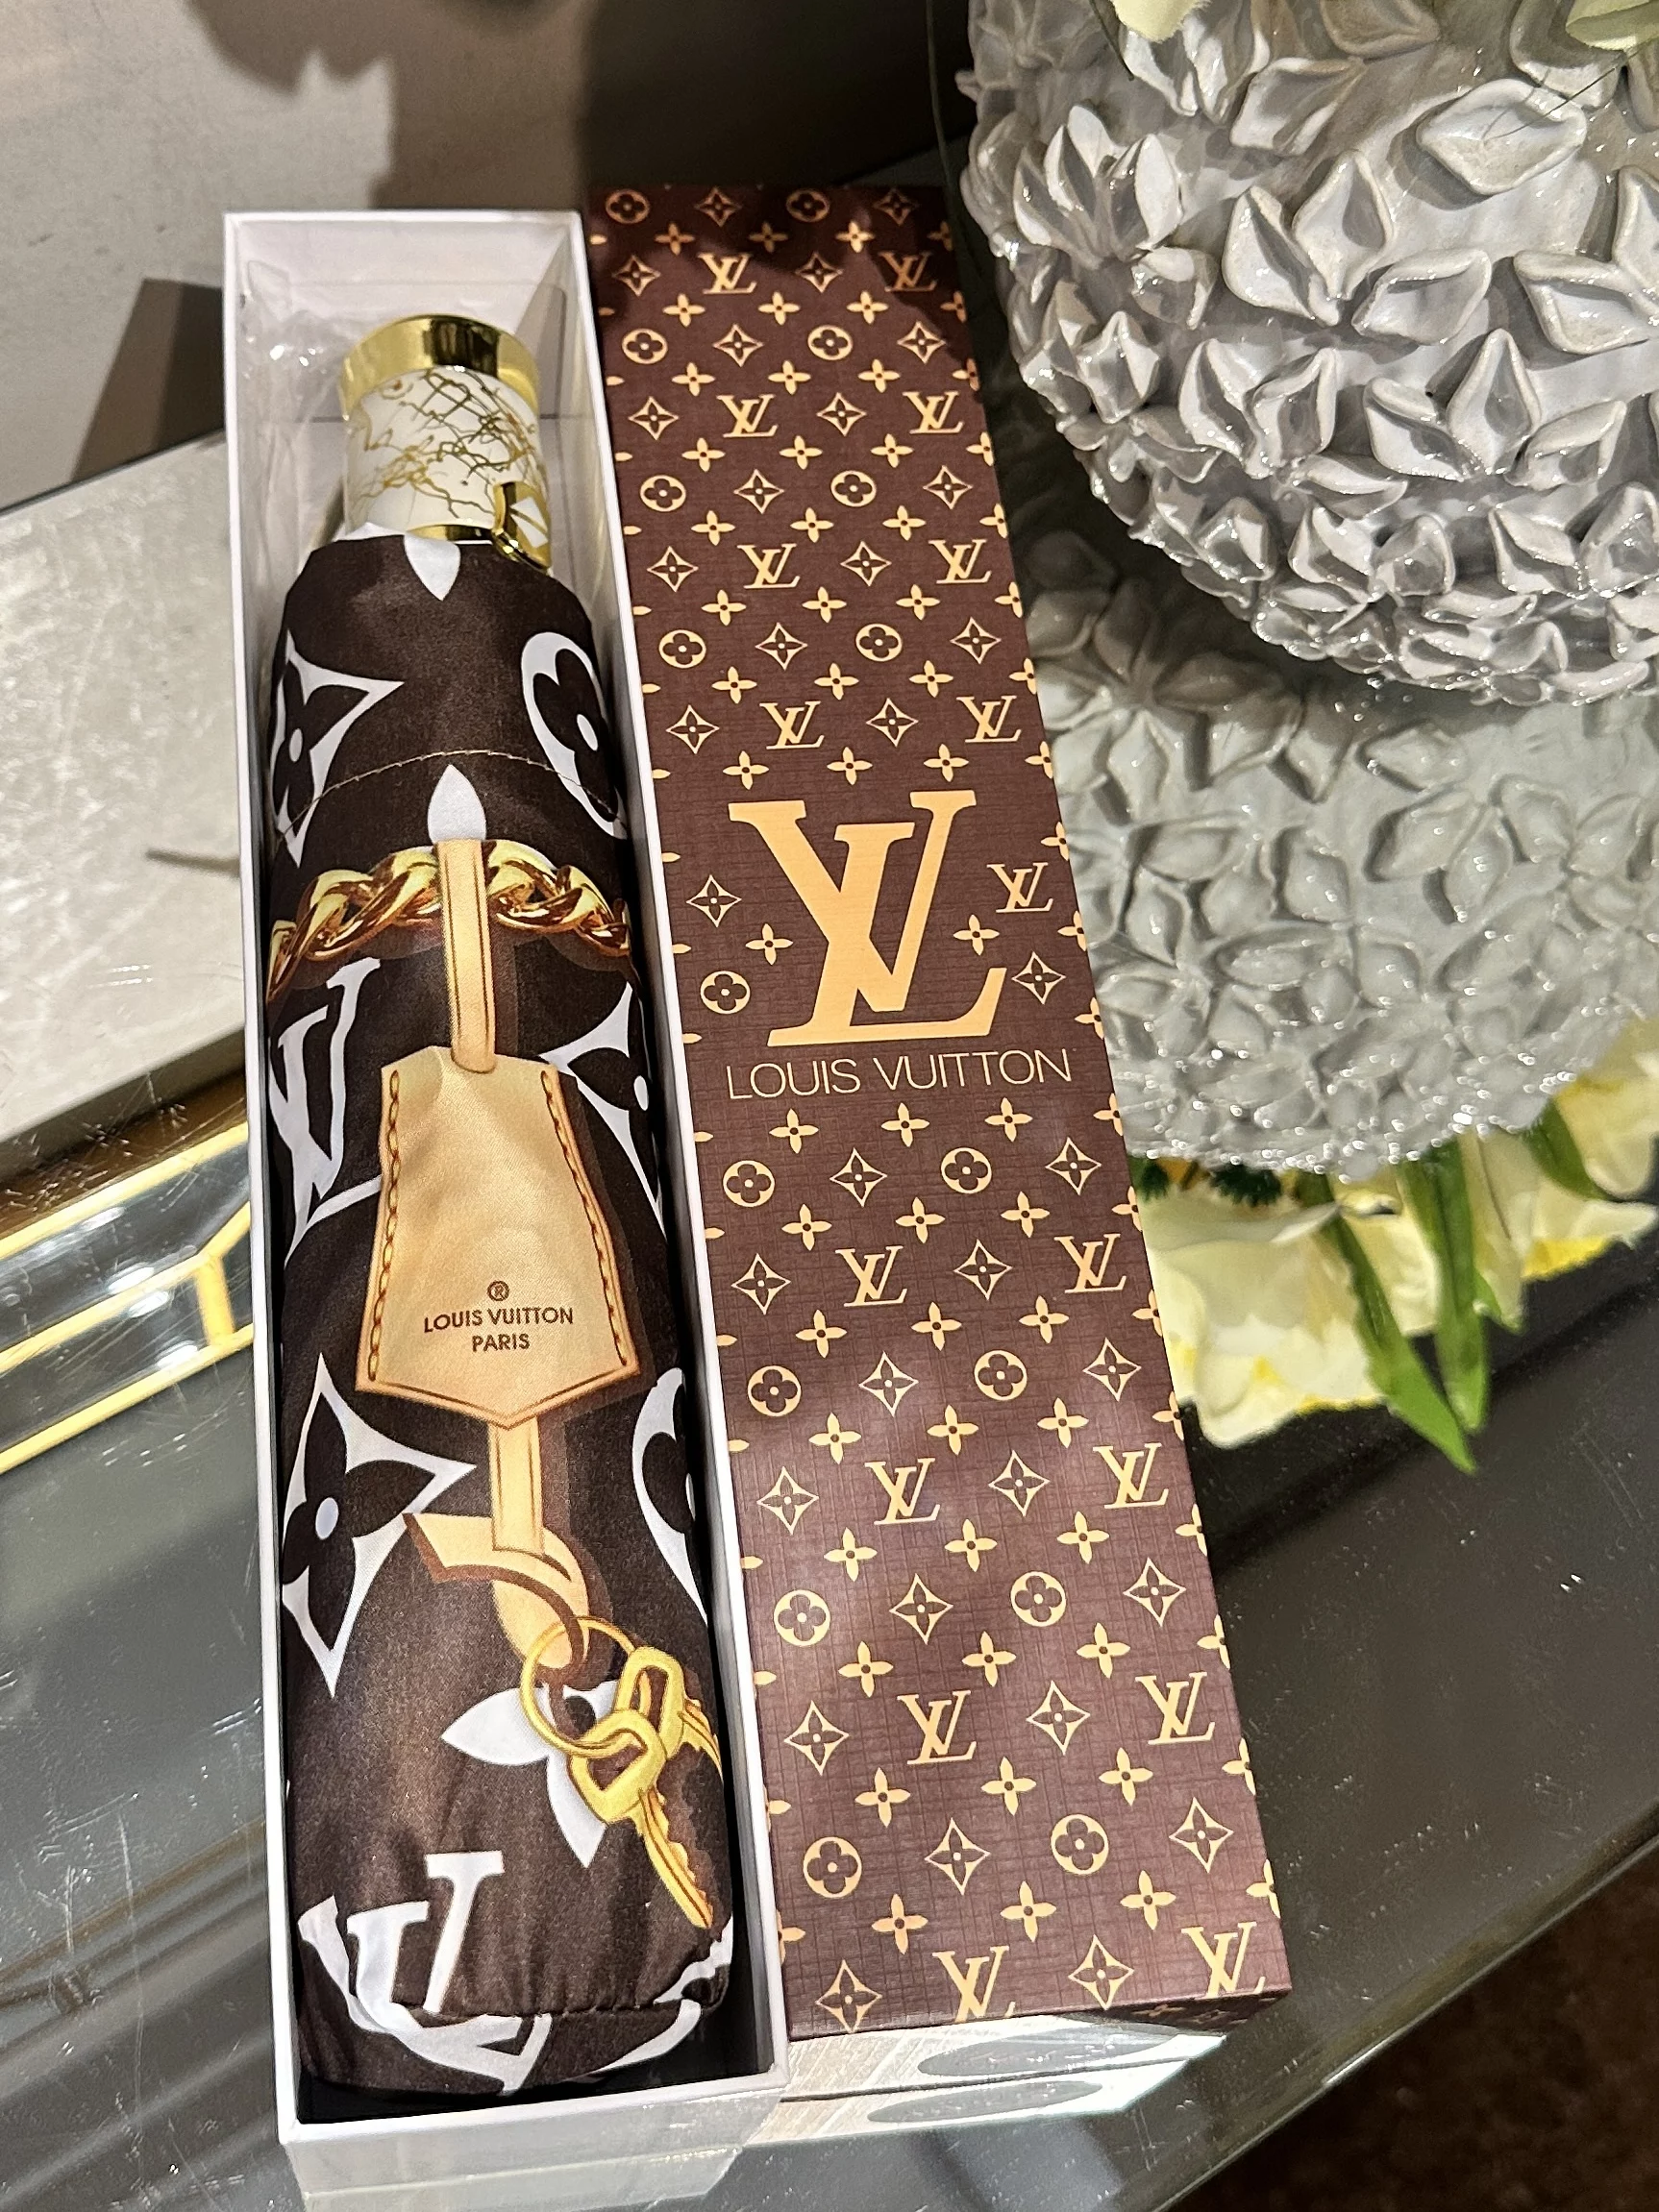 Fantastic Large Louis Vuitton Umbrella with logo, Wood handle